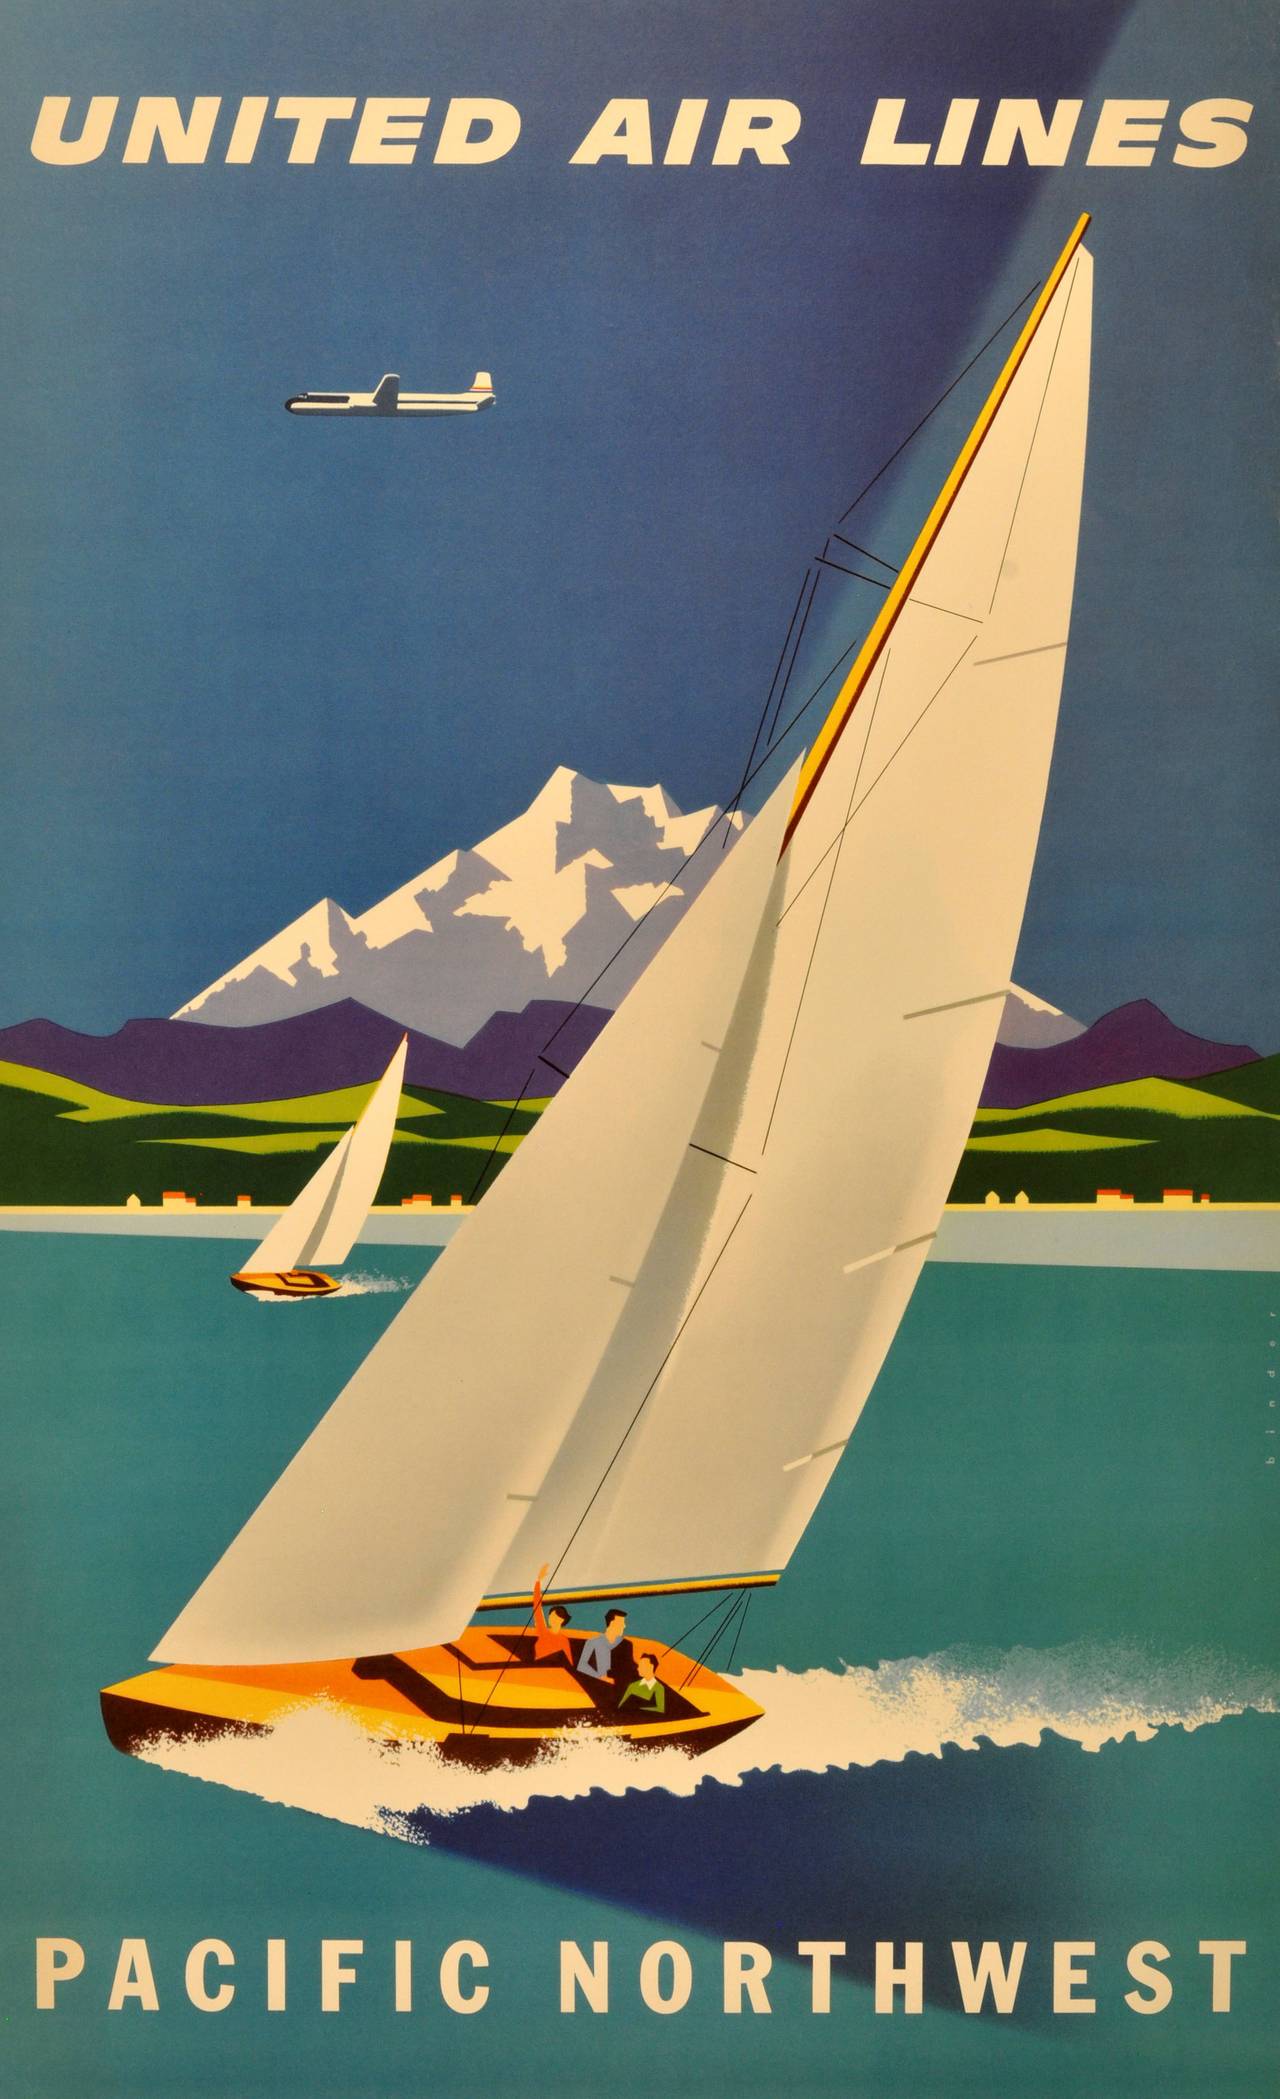 vintage travel ads art prints